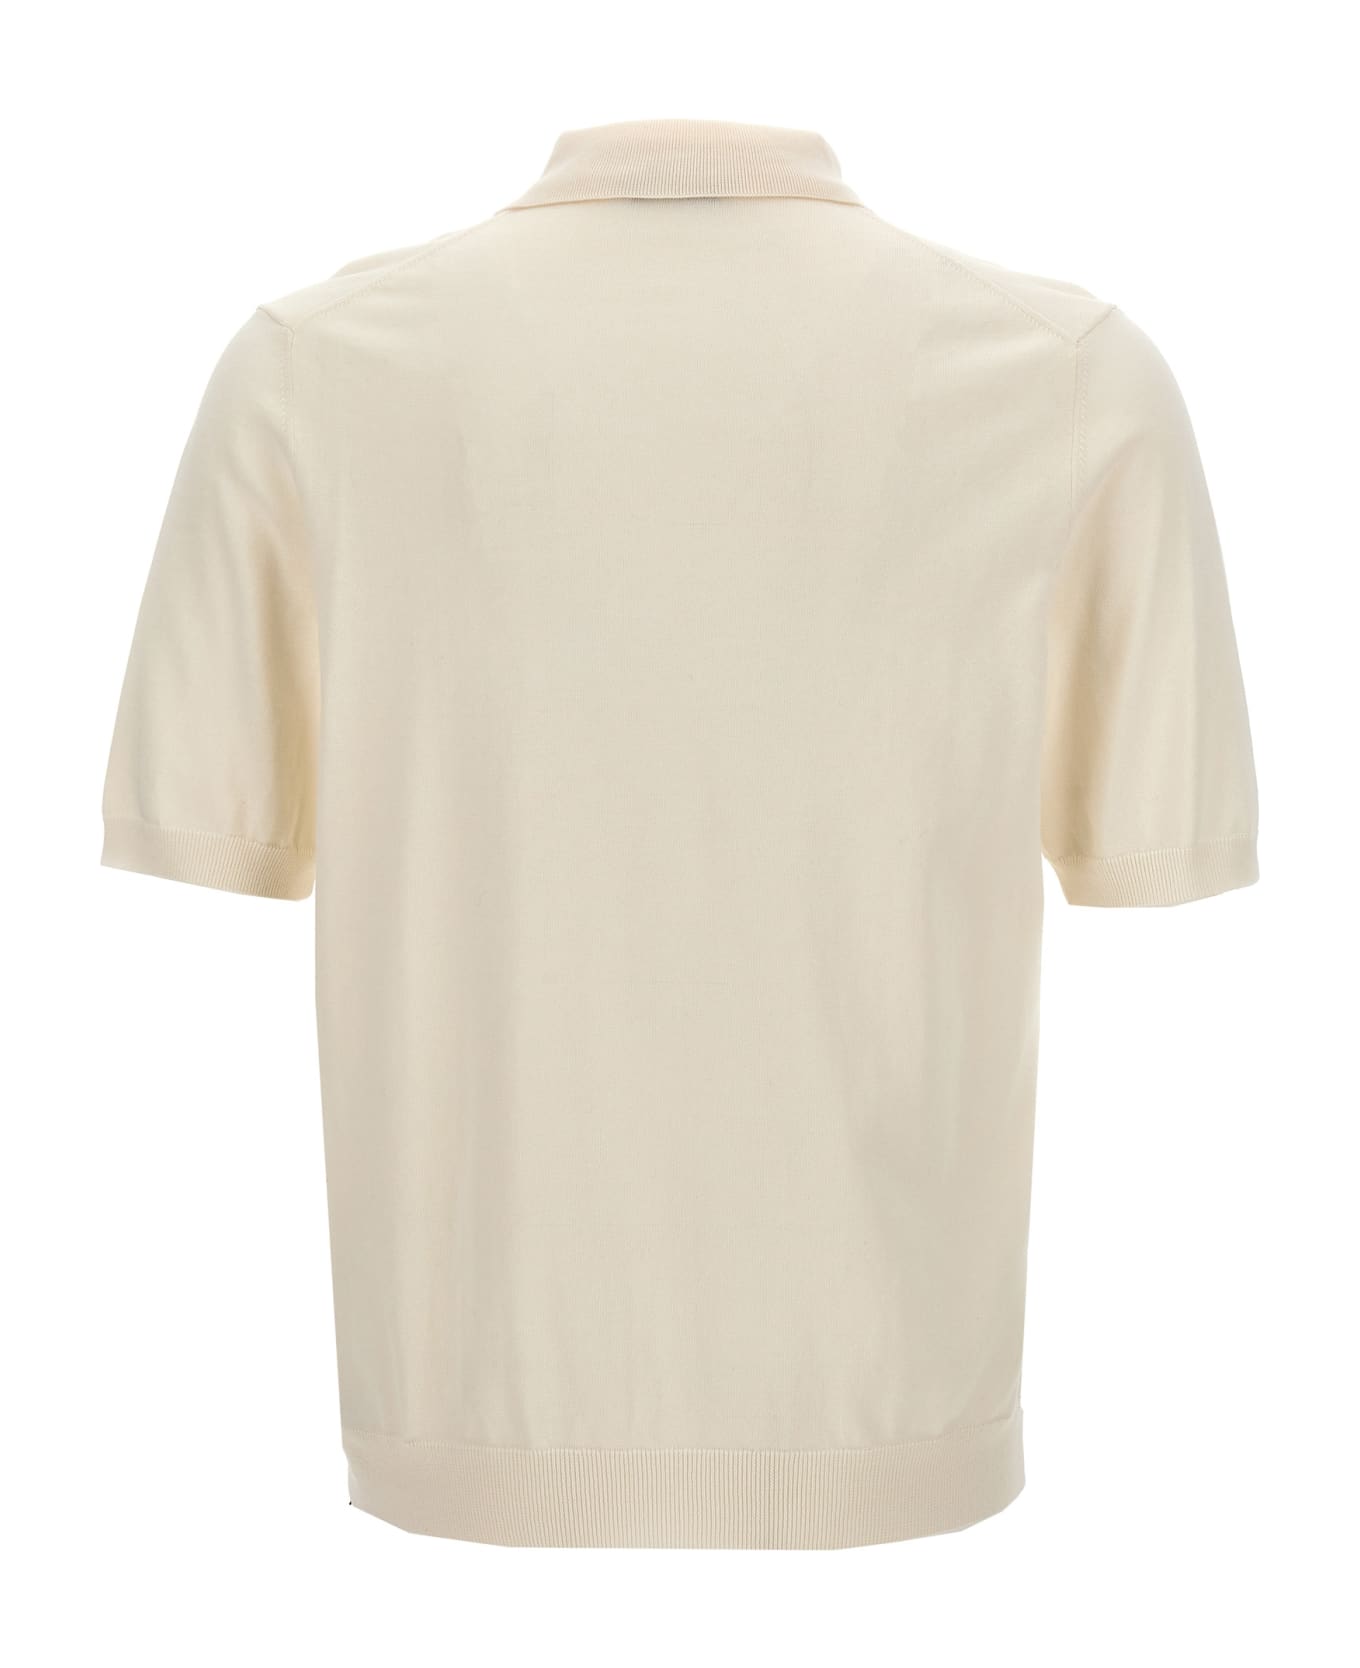 Zanone Cotton Polo Shirt - White ポロシャツ